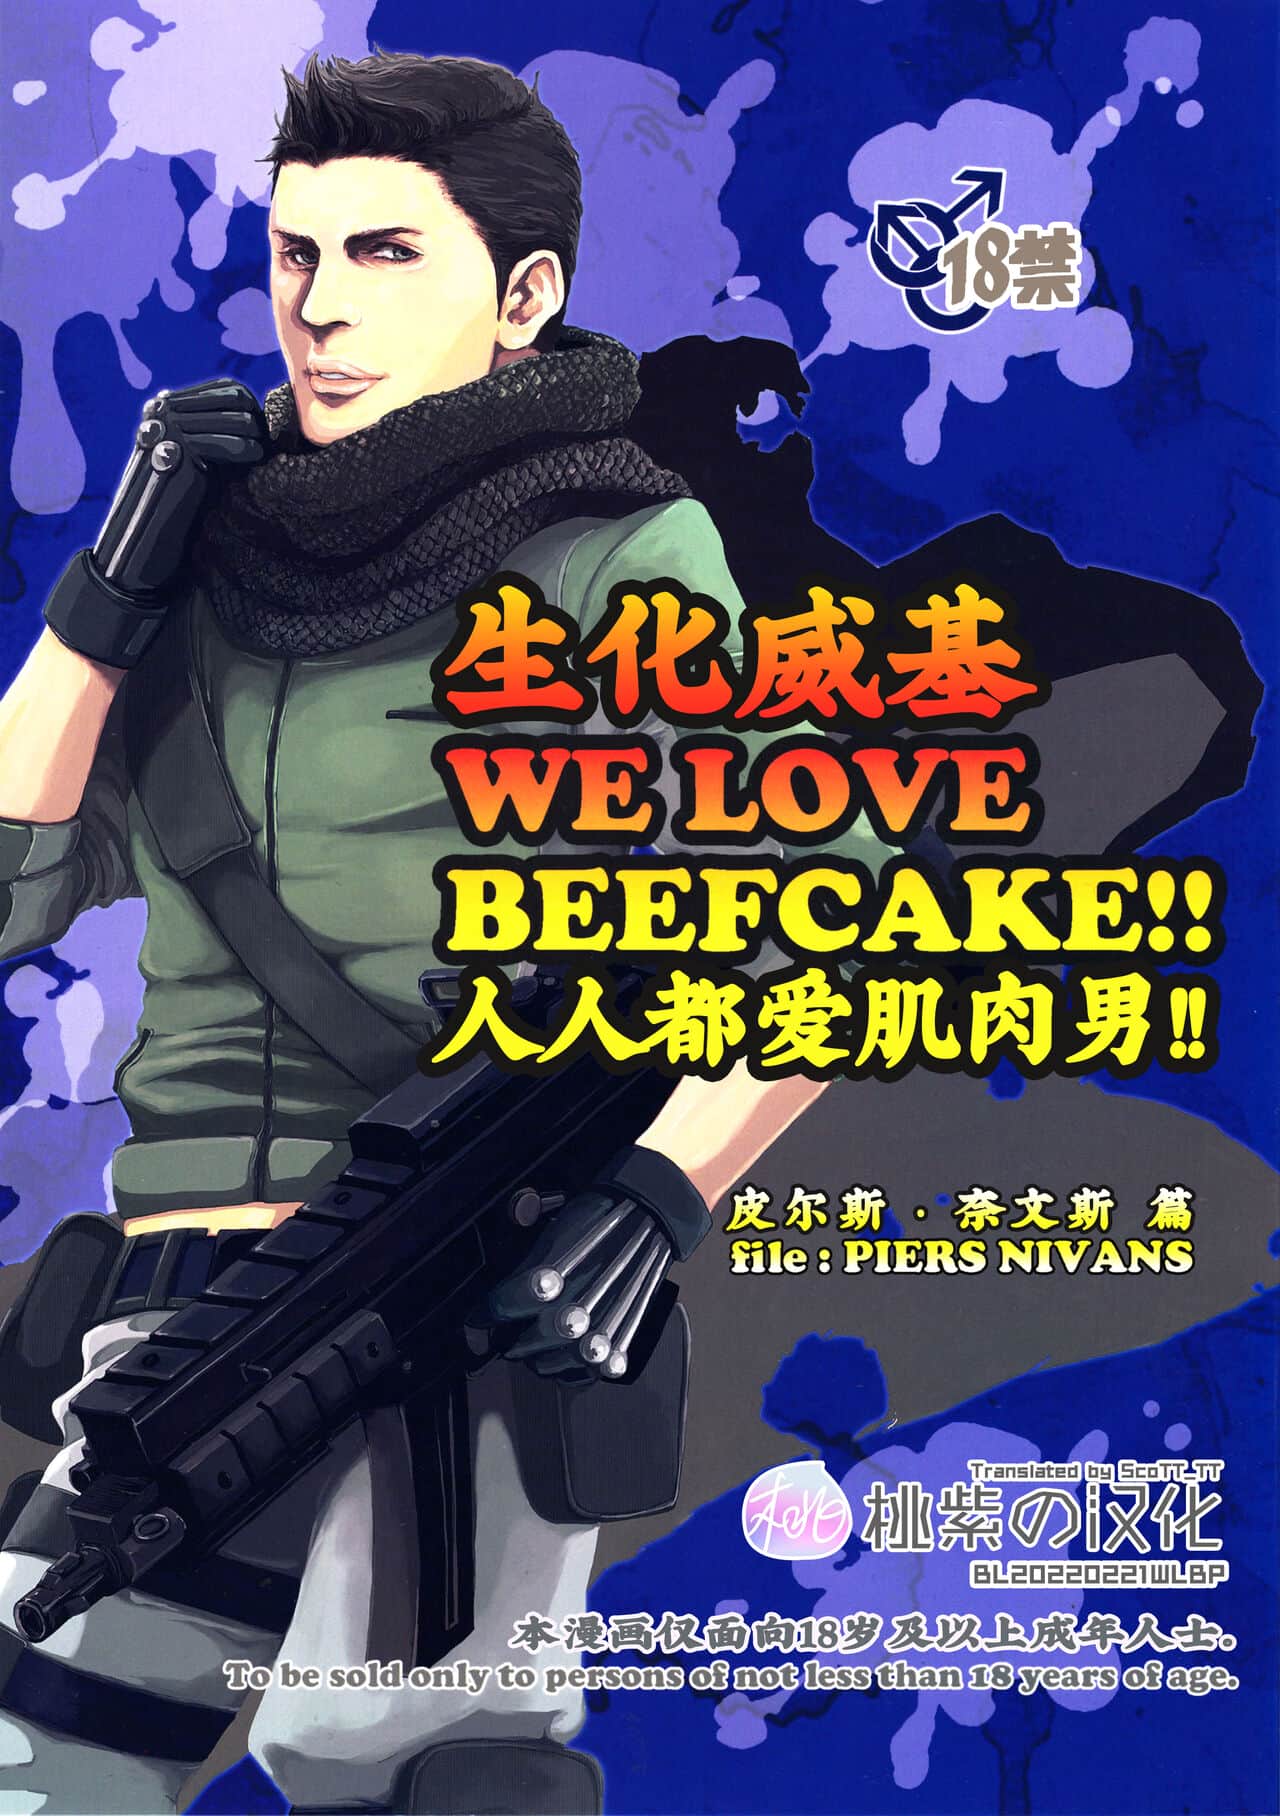 WE LOVE BEEFCAKE!! file:PIERS NIVANS (Resident Evil)｜人人都爱肌肉男!!皮尔斯篇(生化危机)